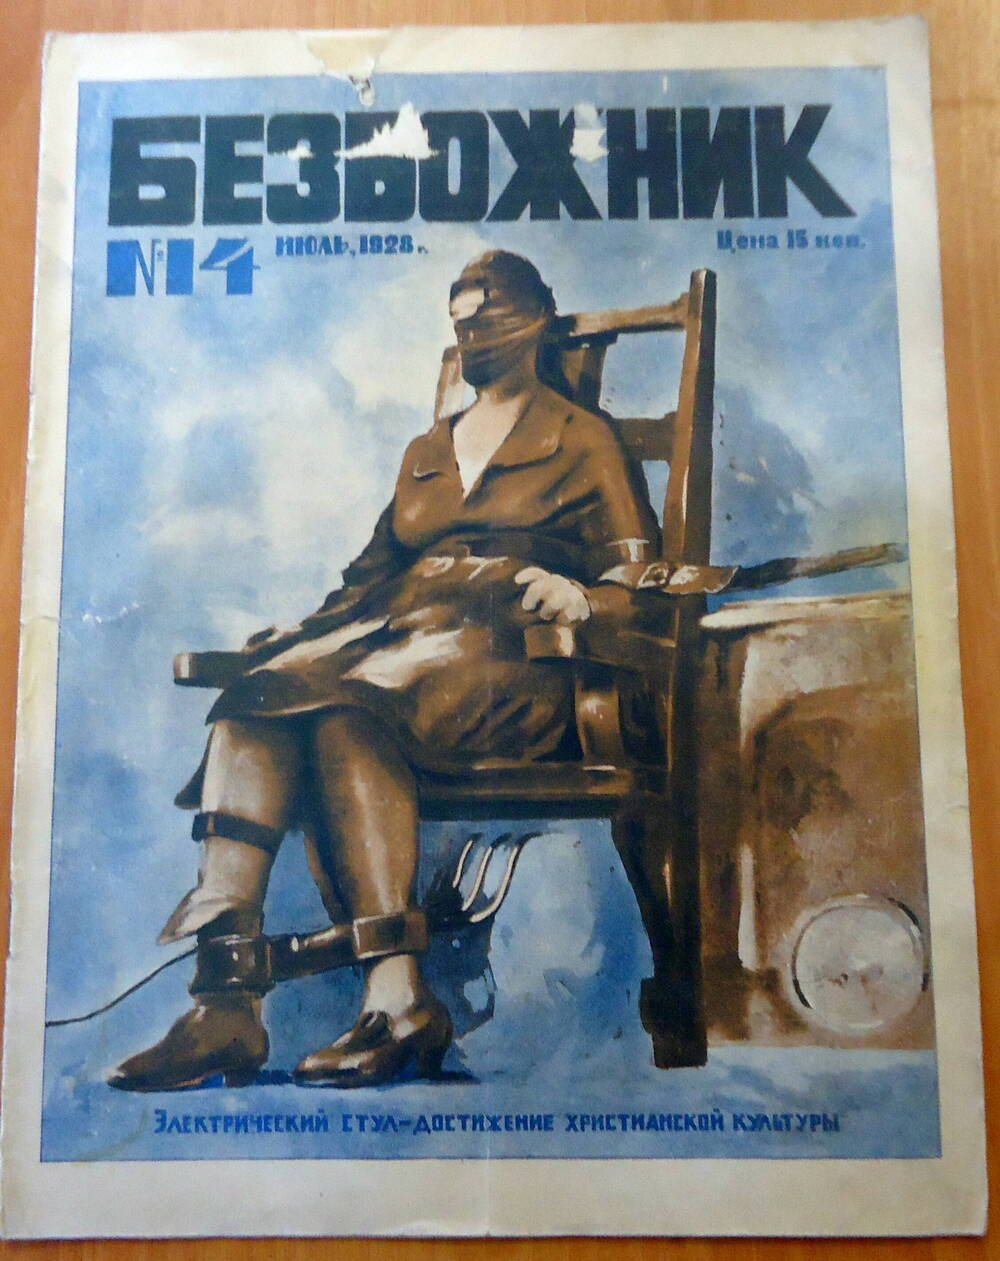 Журнал  Безбожник  № 4 , июль 1928 г.